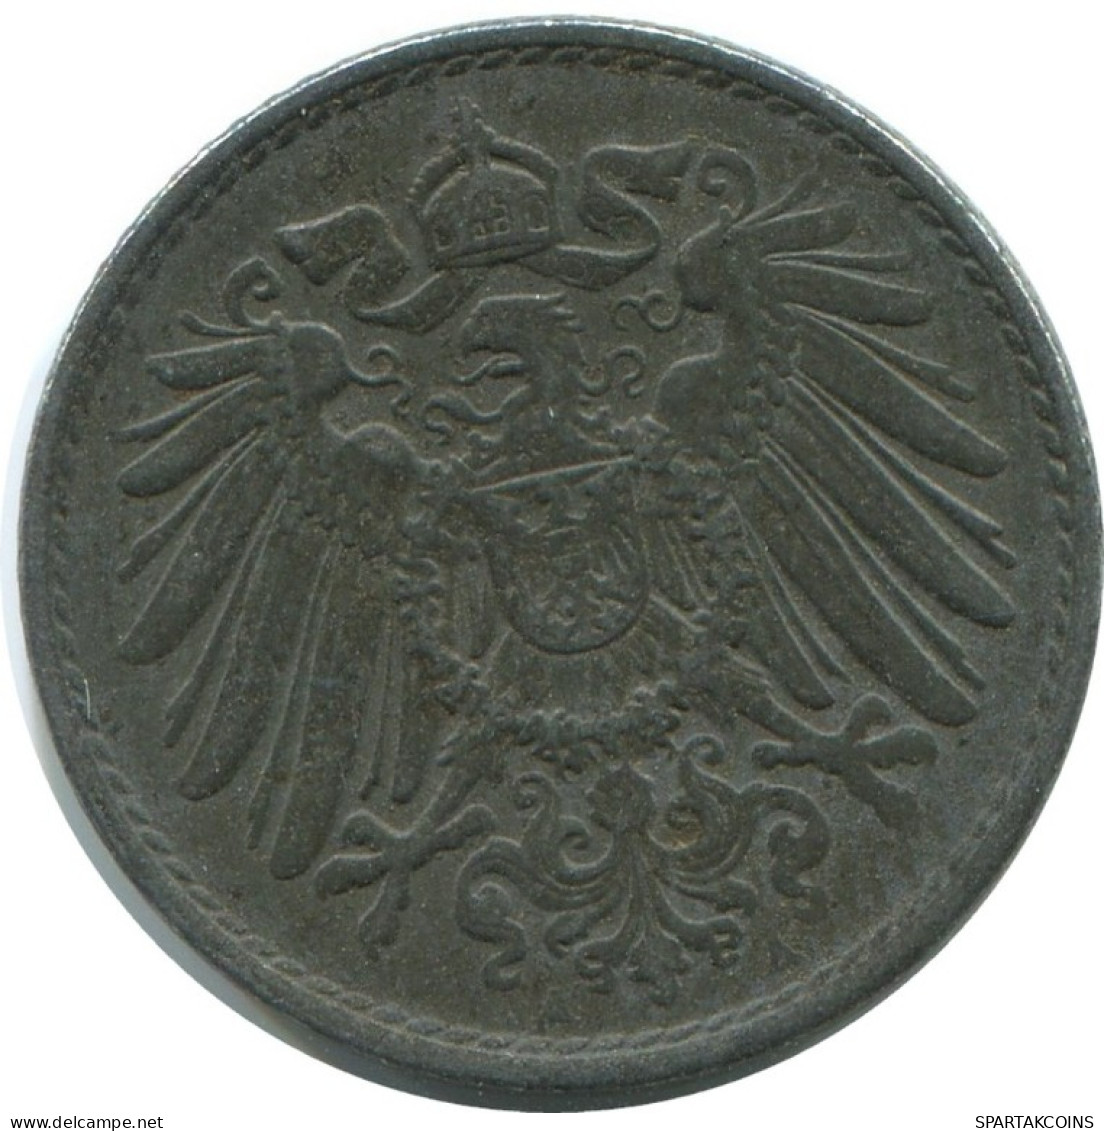 5 PFENNIG 1921 A GERMANY Coin #AE668.U.A - 5 Rentenpfennig & 5 Reichspfennig